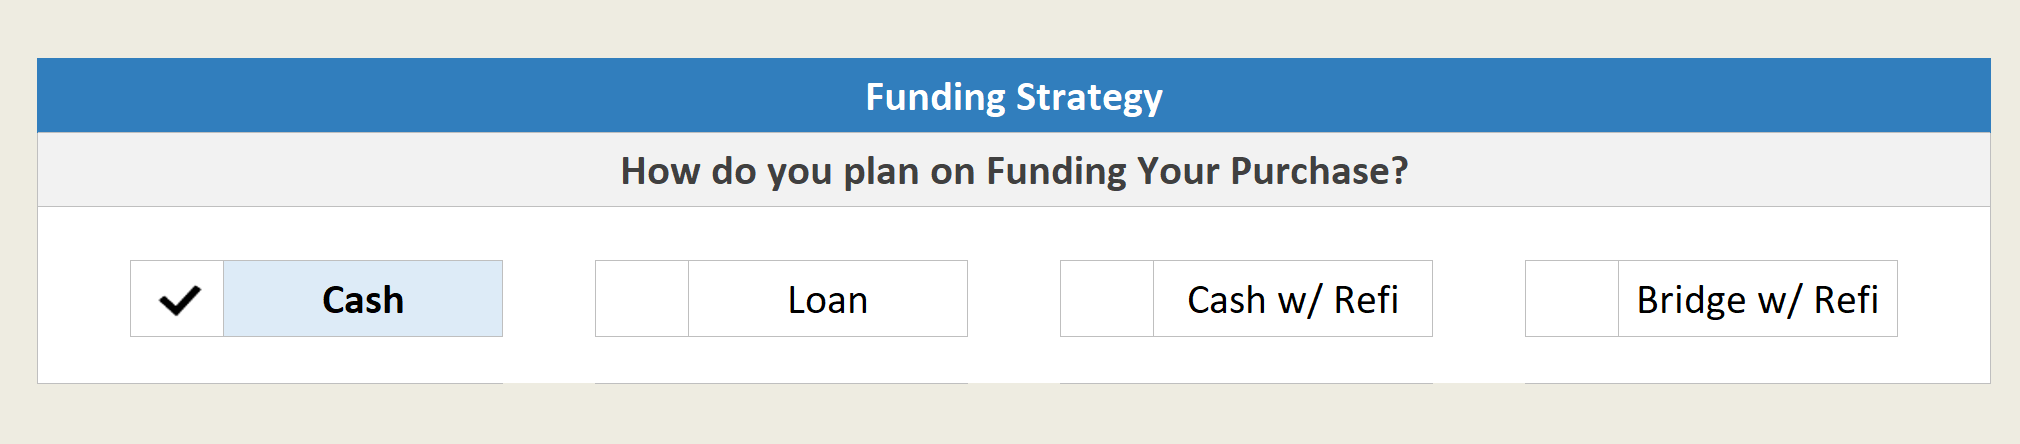 Rental Funding Strategy